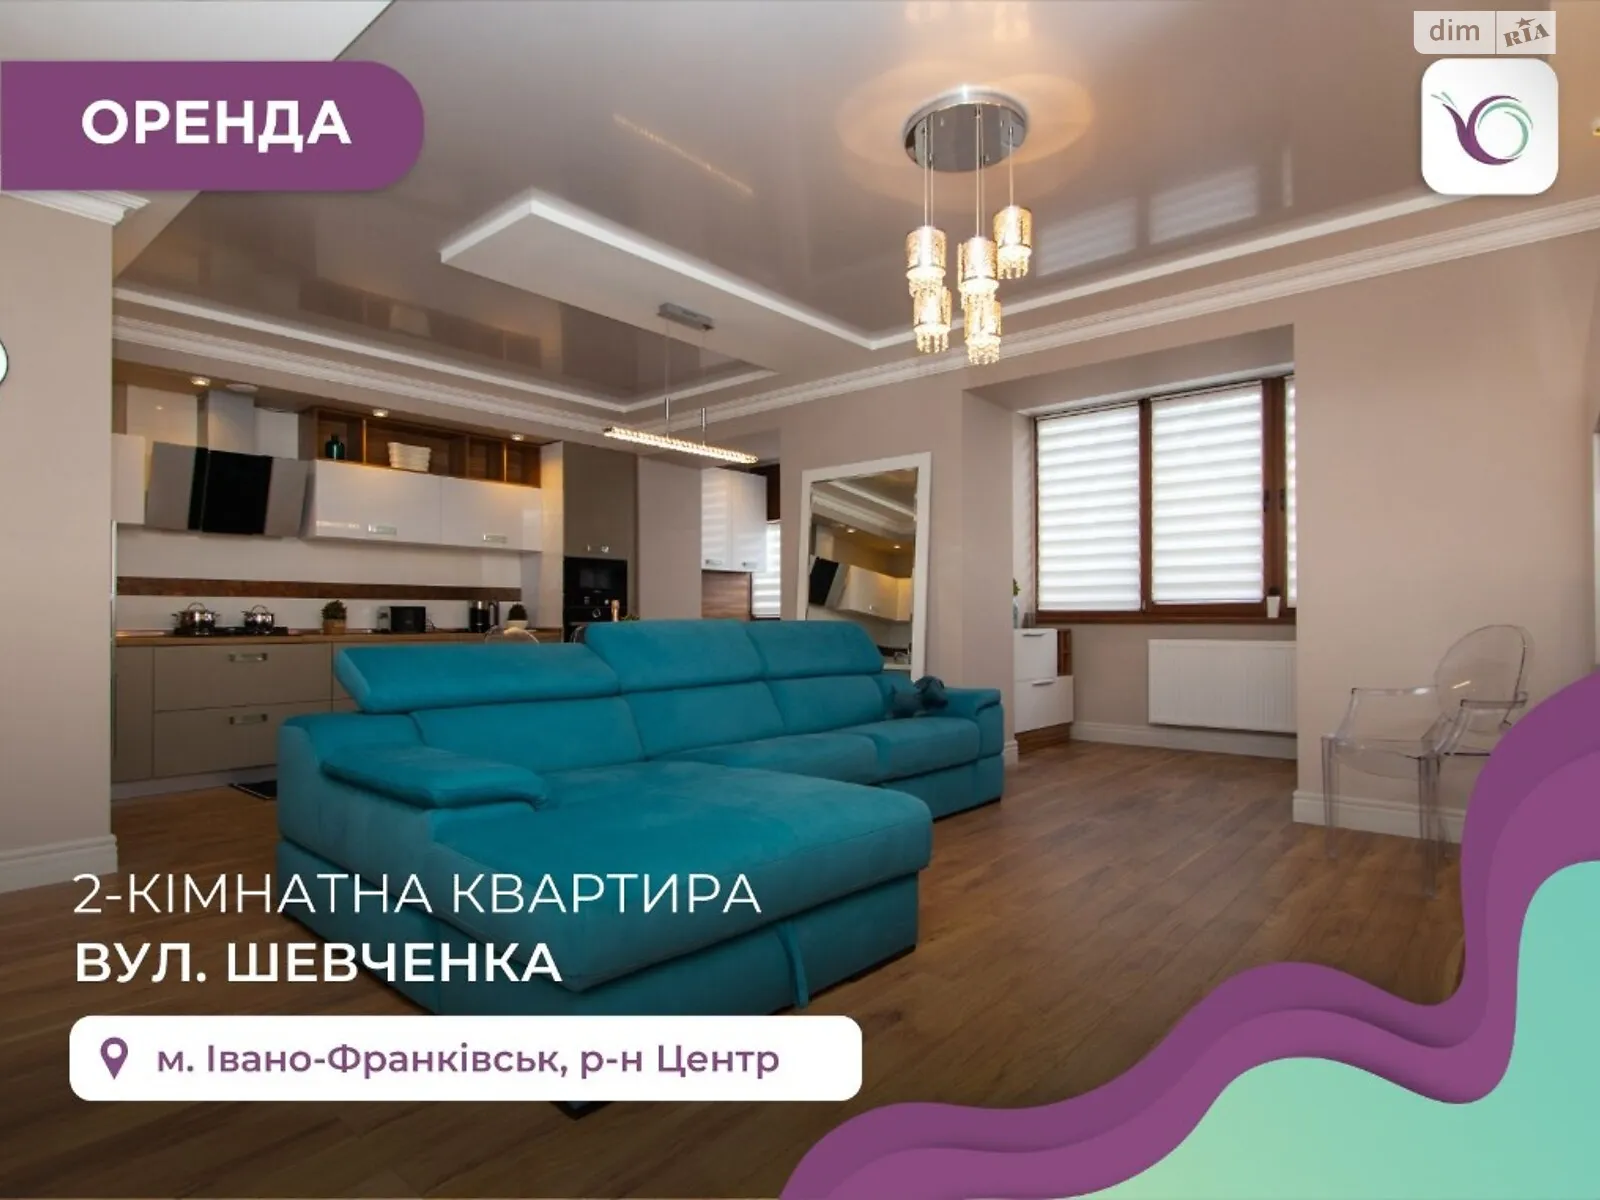 Сдается в аренду 2-комнатная квартира 77 кв. м в Ивано-Франковске, ул. Тараса Шевченко